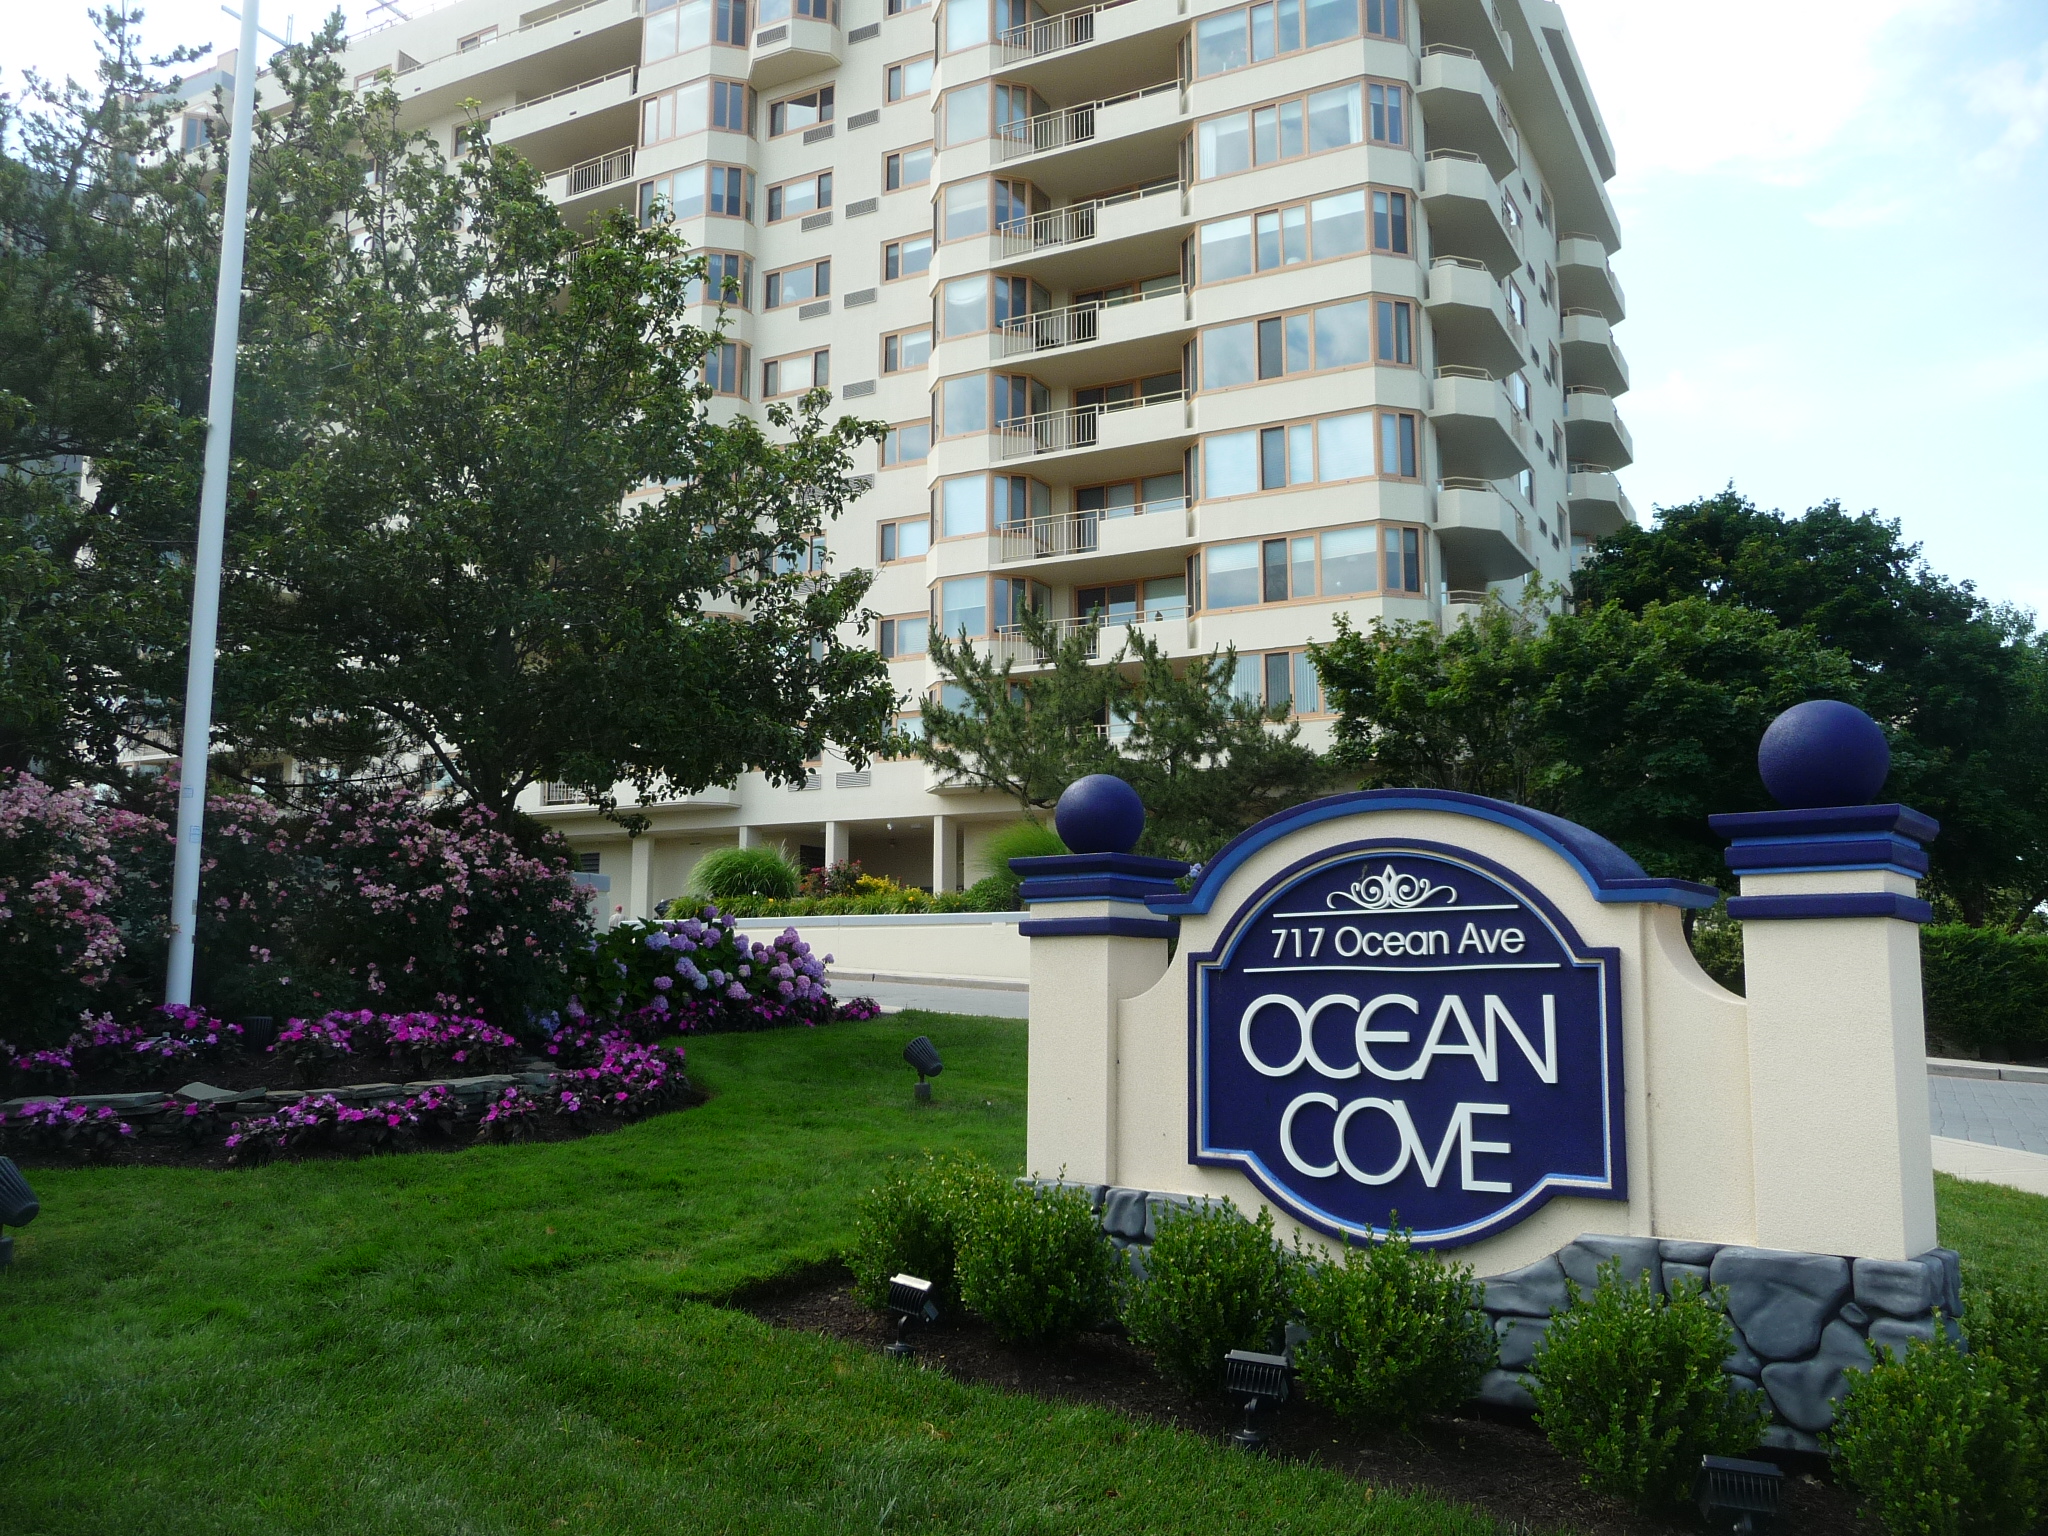 Ocean Cove Condos for Sale in Long Branch NJ 07740